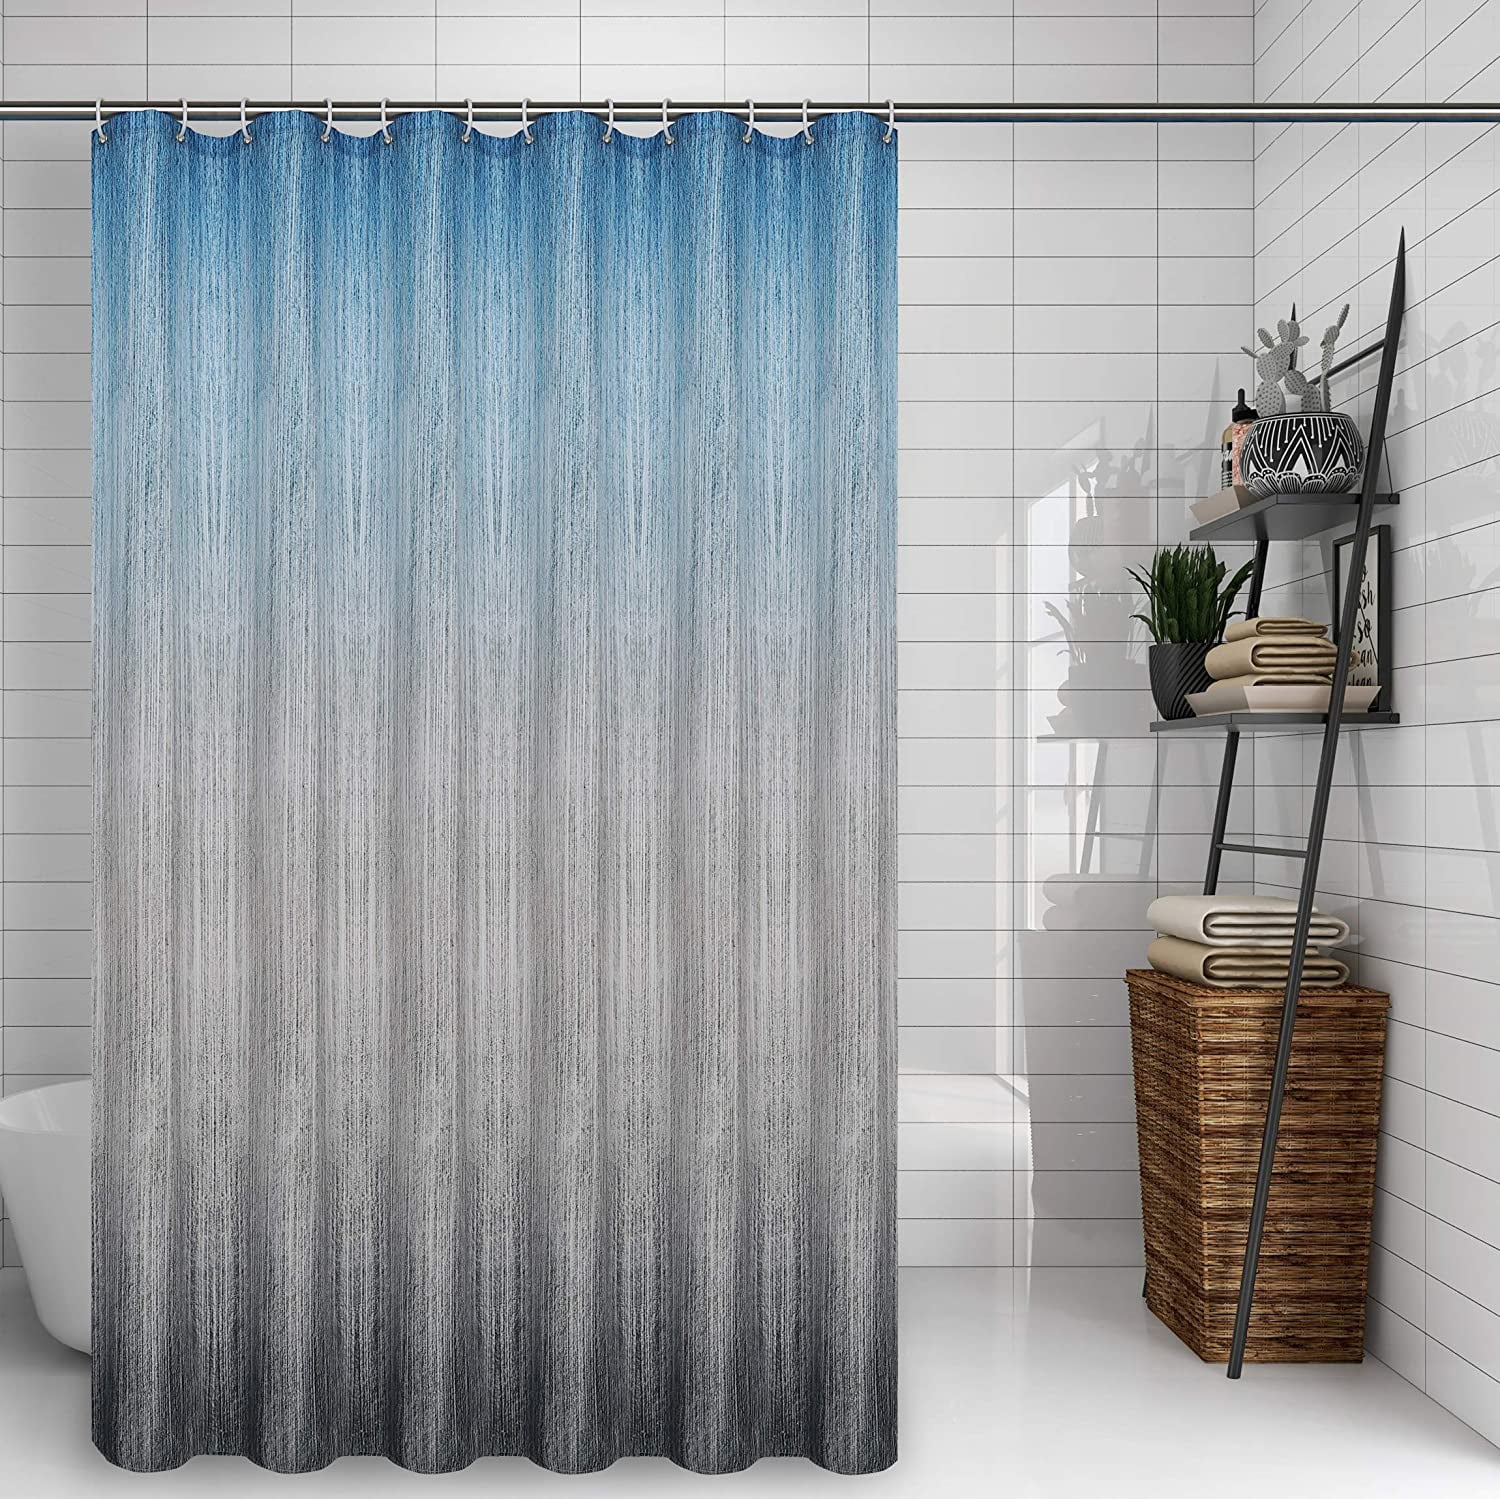 American Flag Wooden Board Shower Curtain Bathroom Decor Fabric & 12hooks 71in 